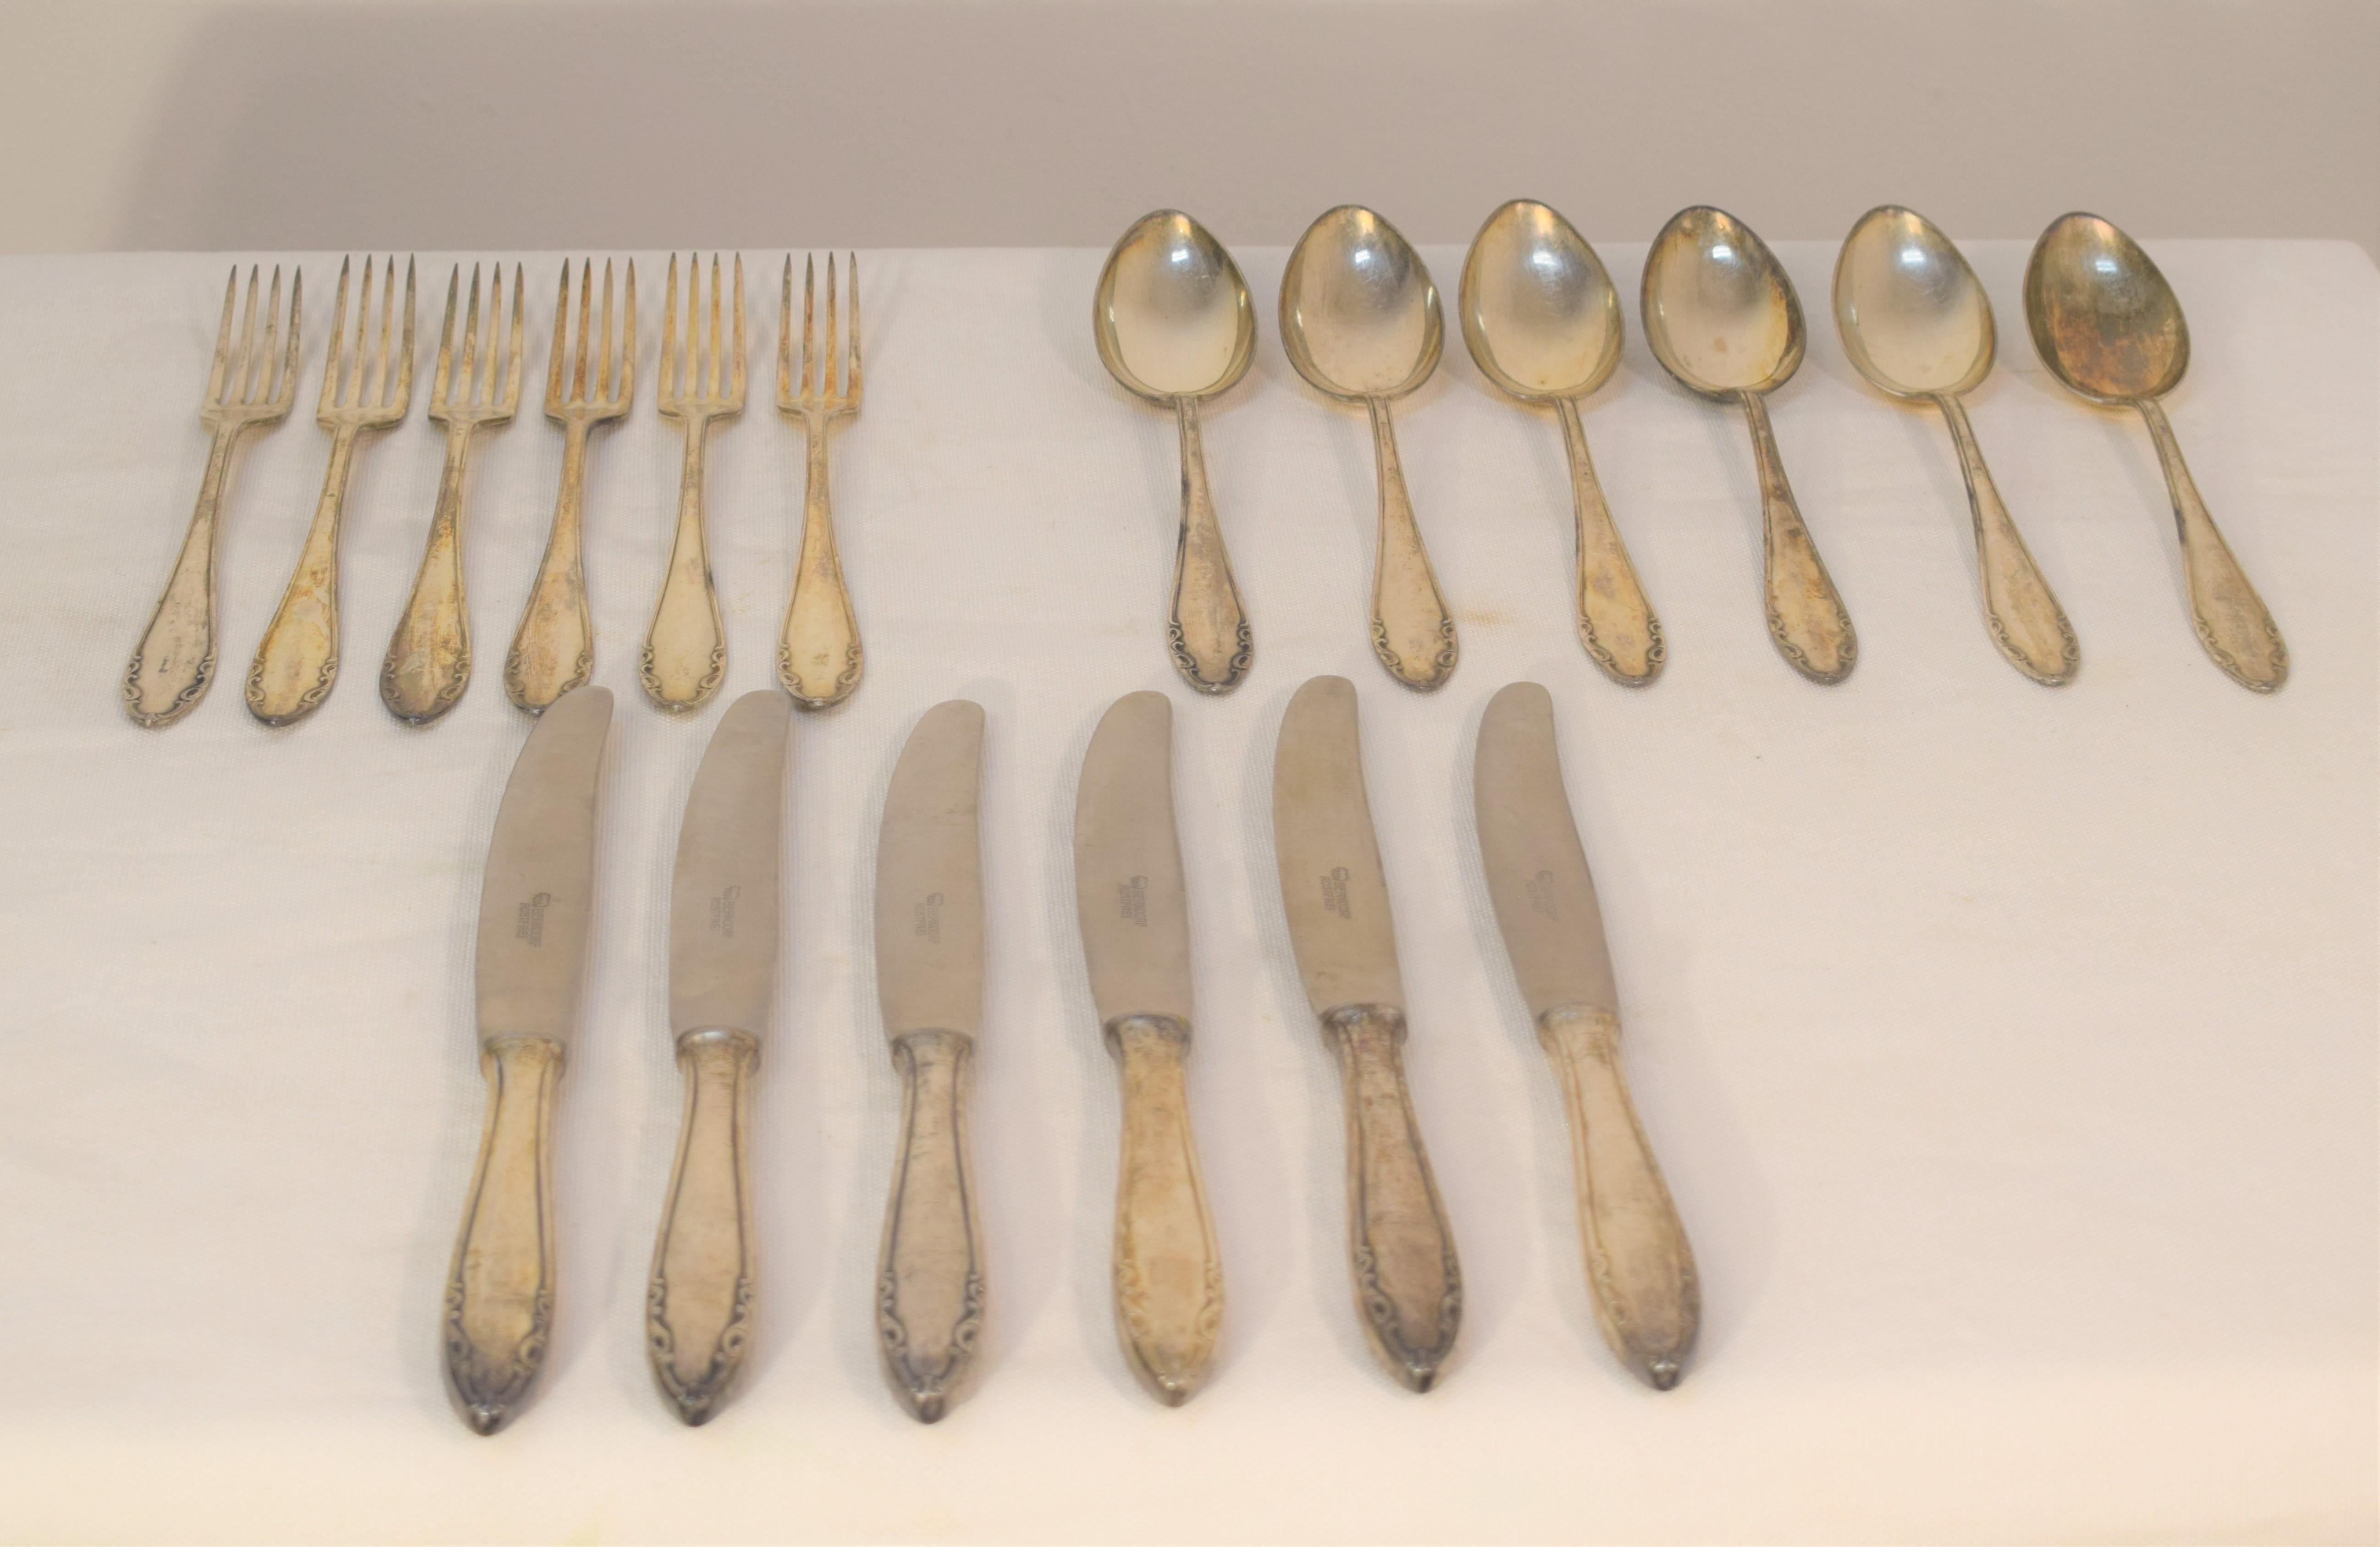 Italian silverware by Krupp Berndorf, 1950s
Dimensions: 
forks 2x1x22 cm.
knives 2,5x1x25 cm.
spoons 2x4x22 cm.